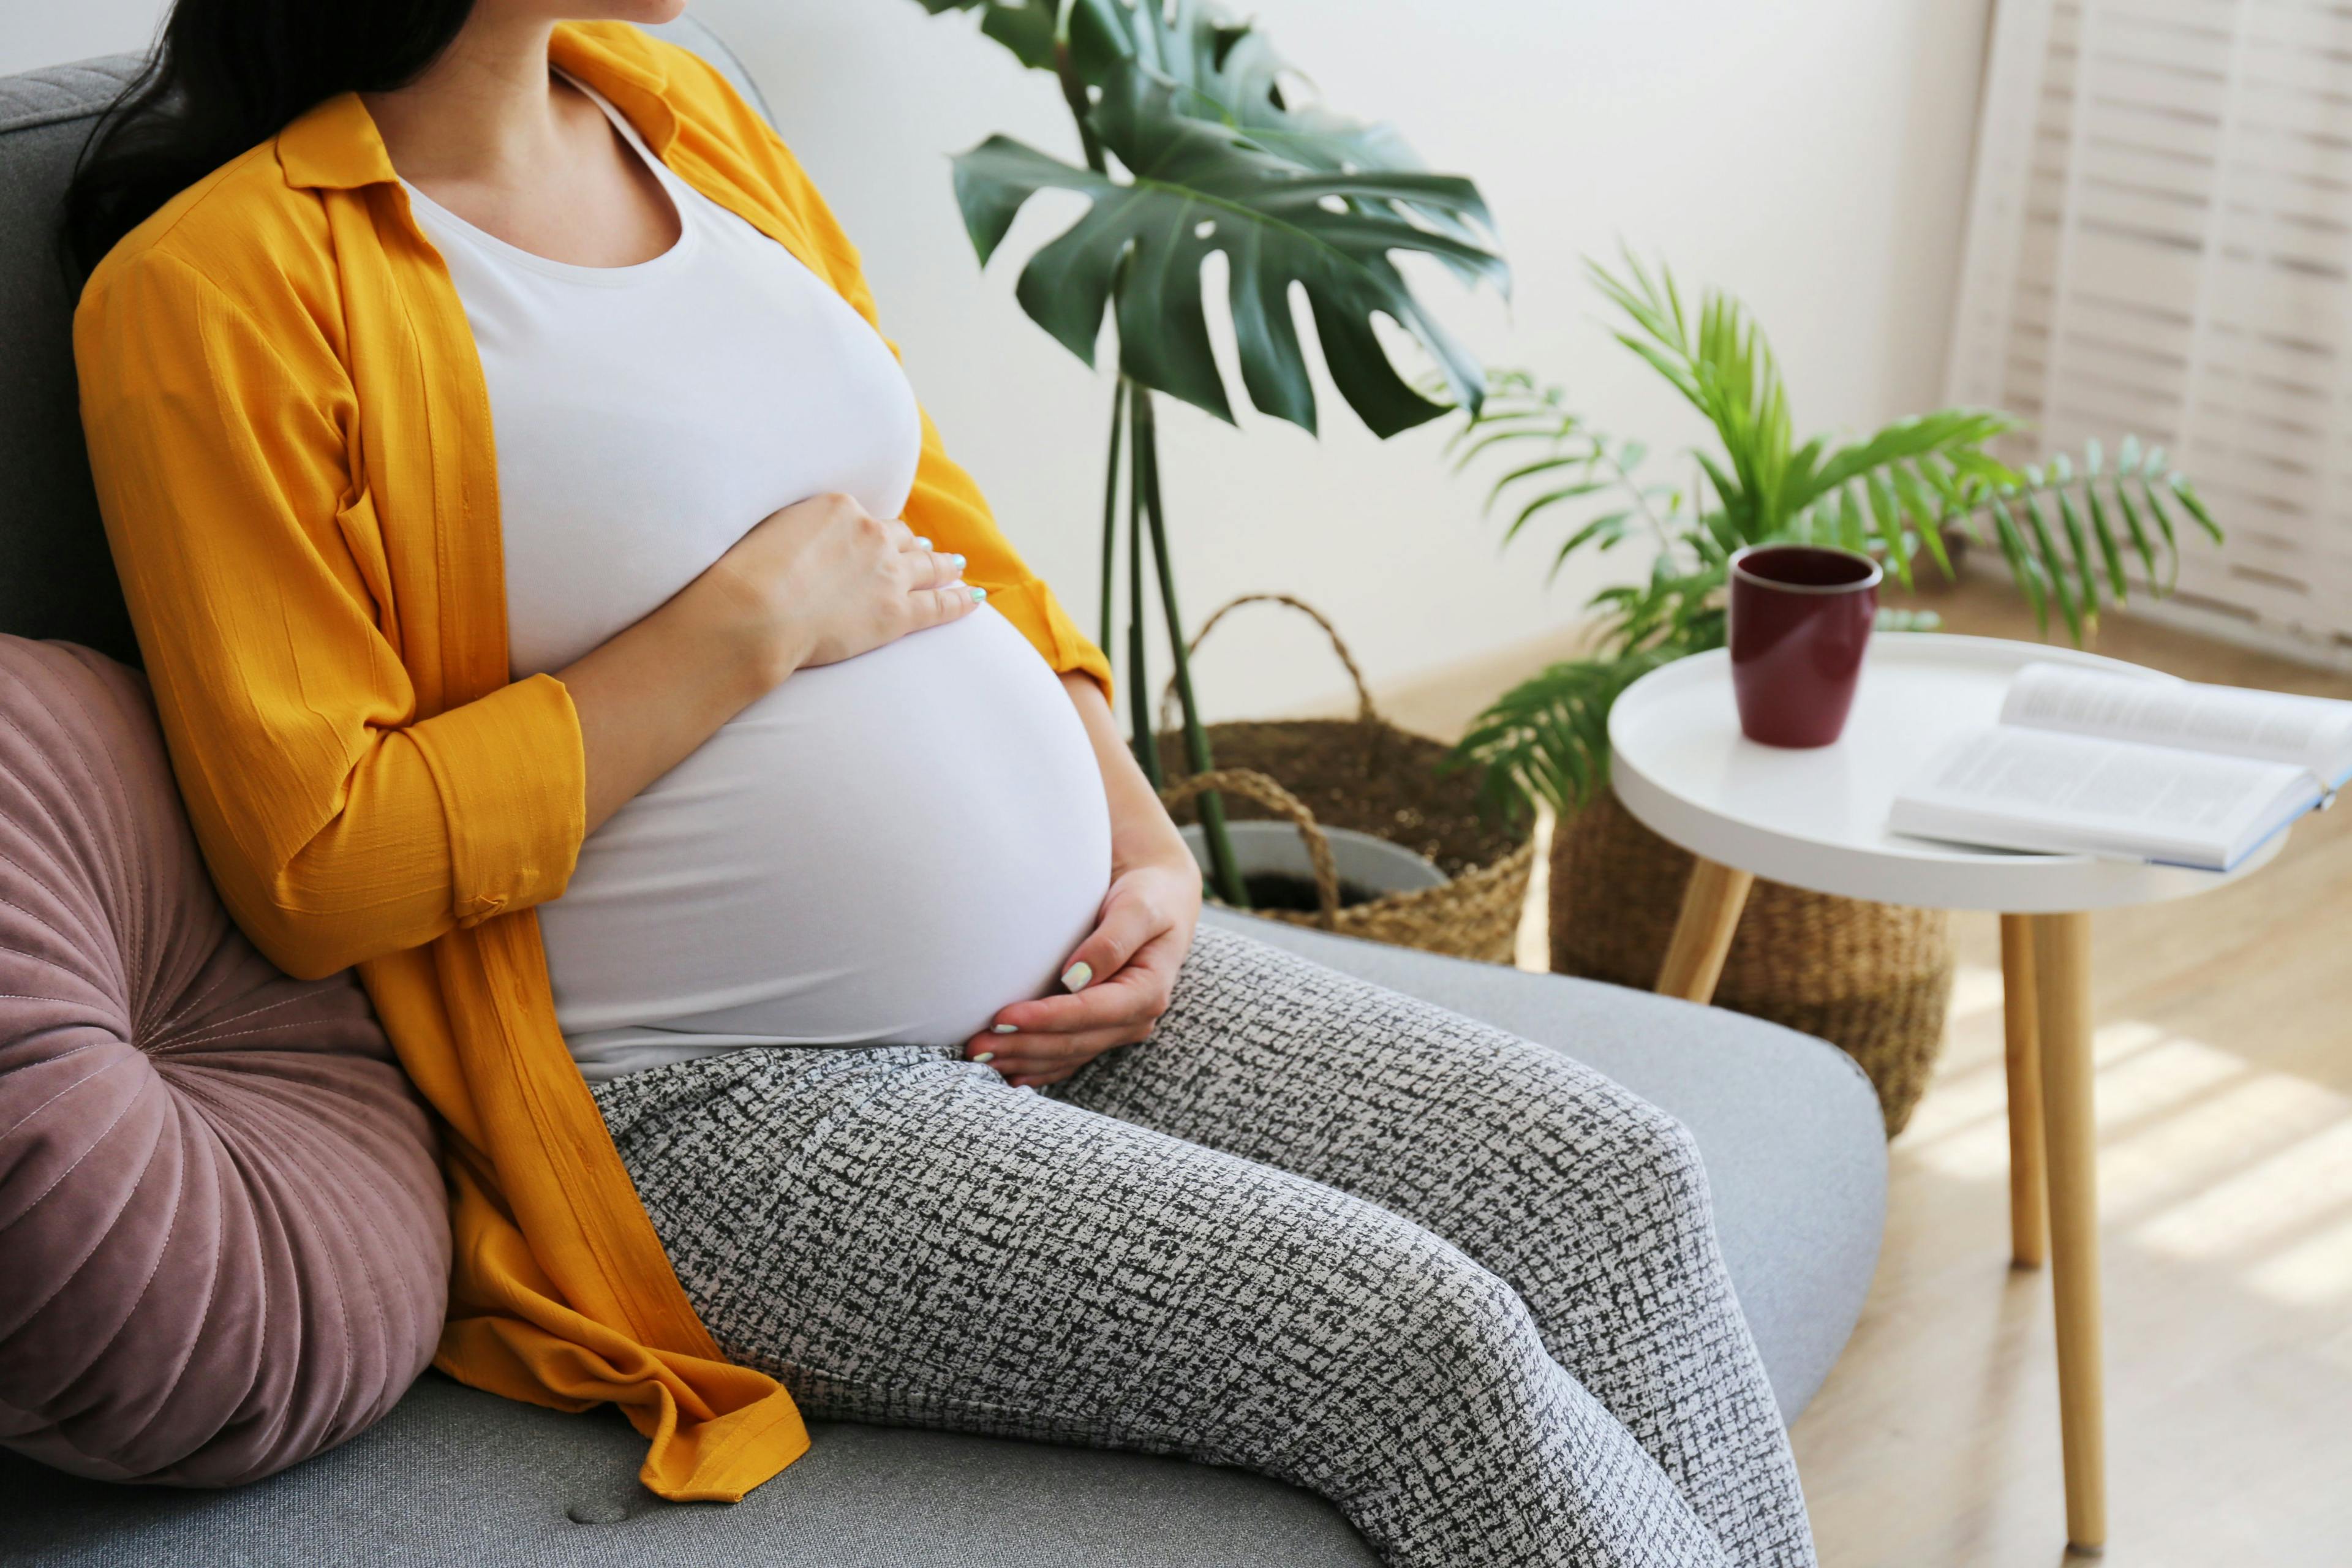 Society for Maternal-Fetal Medicine Consult Series #53: Intrahepatic Cholestasis of Pregnancy